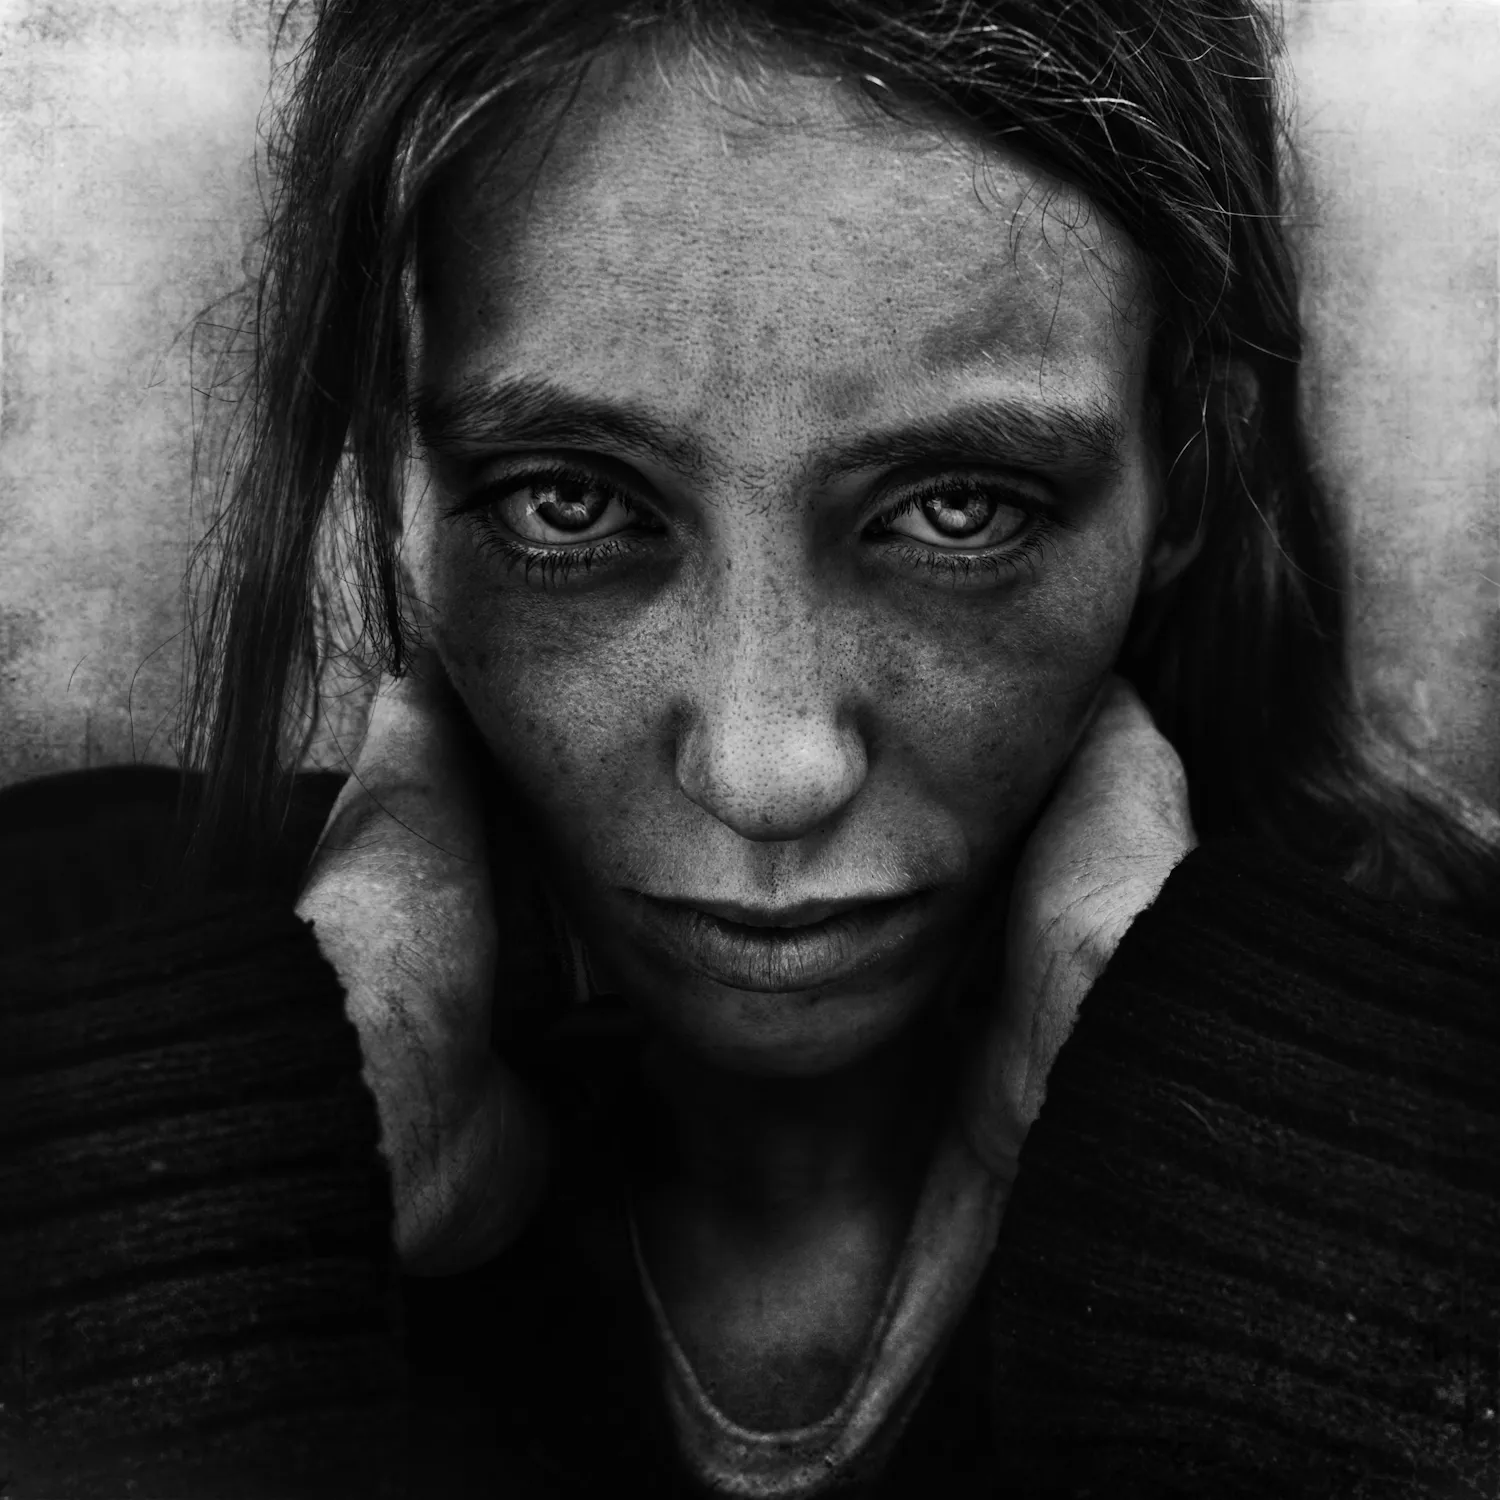 Gypsy woman she homeless. Ли Джеффрис. Lee Jeffries бездомные. Ли Джеффрис фотограф. Ли Джеффрис портреты.